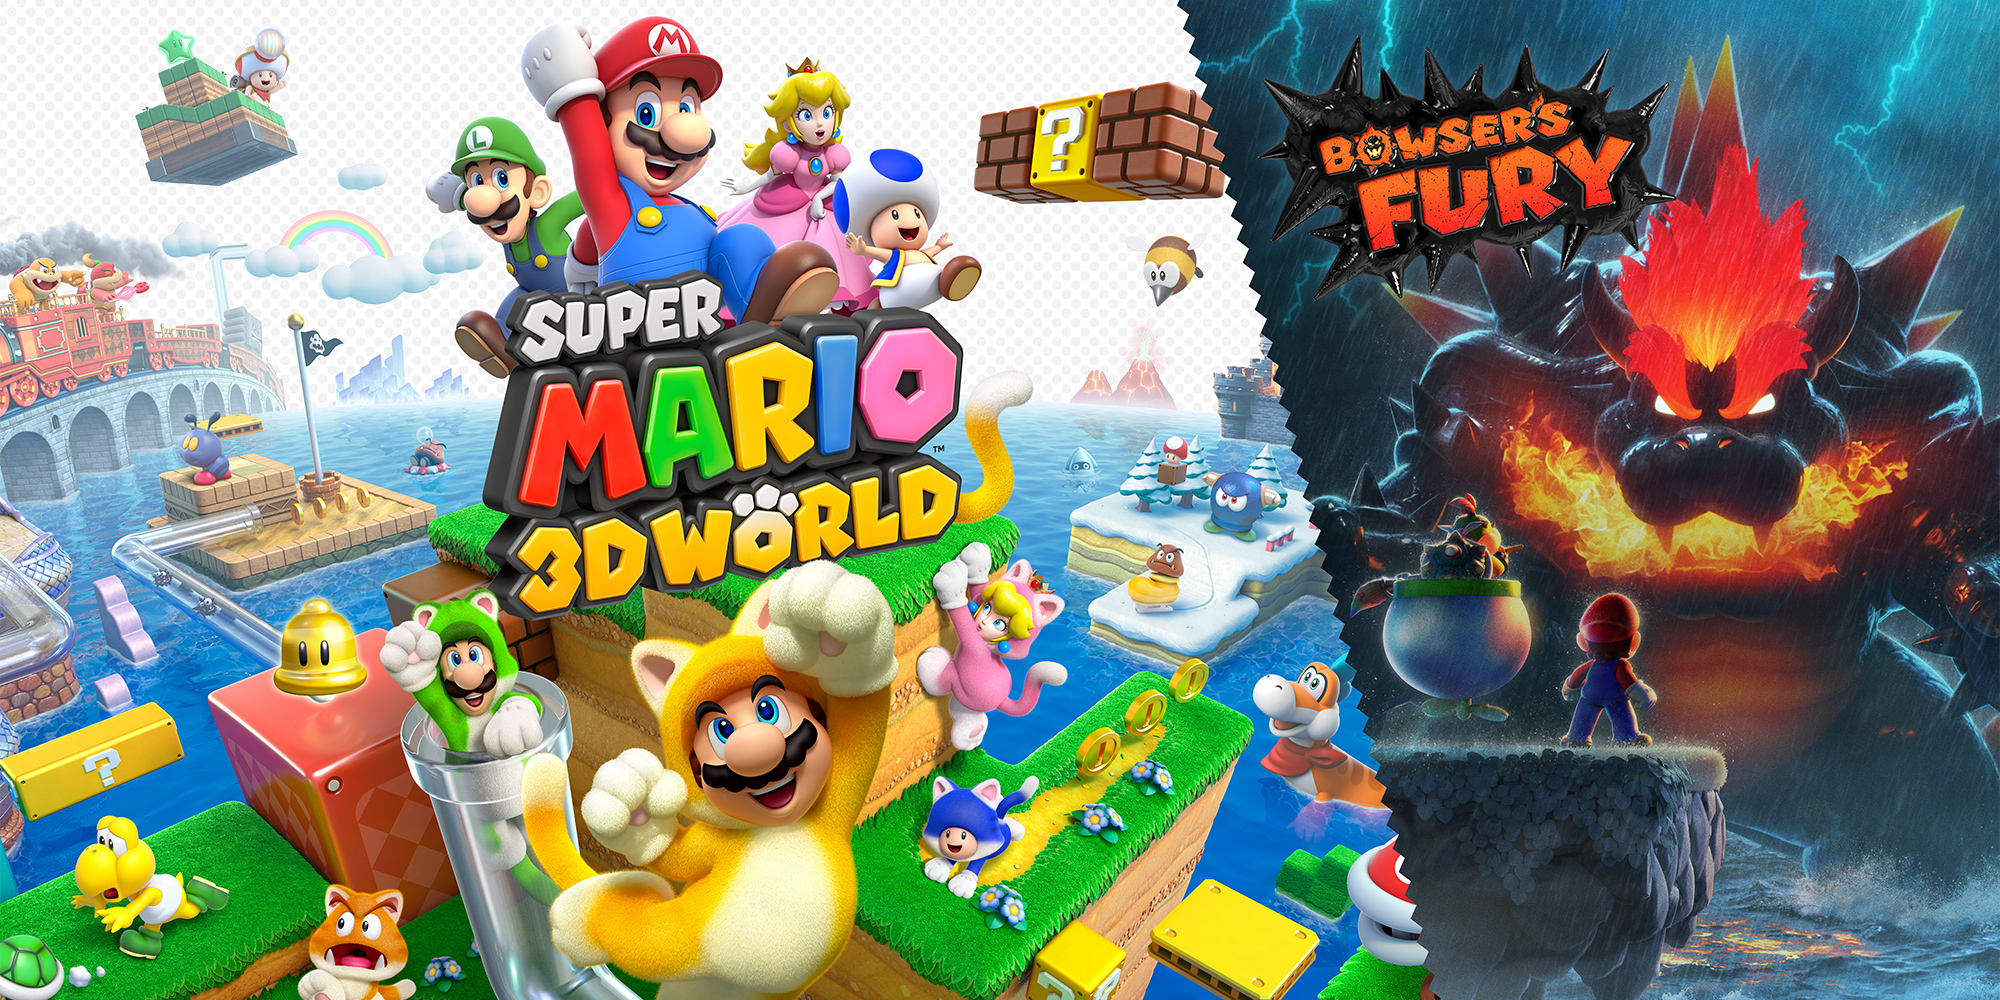 schuld Blij evenwicht Super Mario 3D World + Bowser's Fury | Nintendo Switch-games | Games |  Nintendo